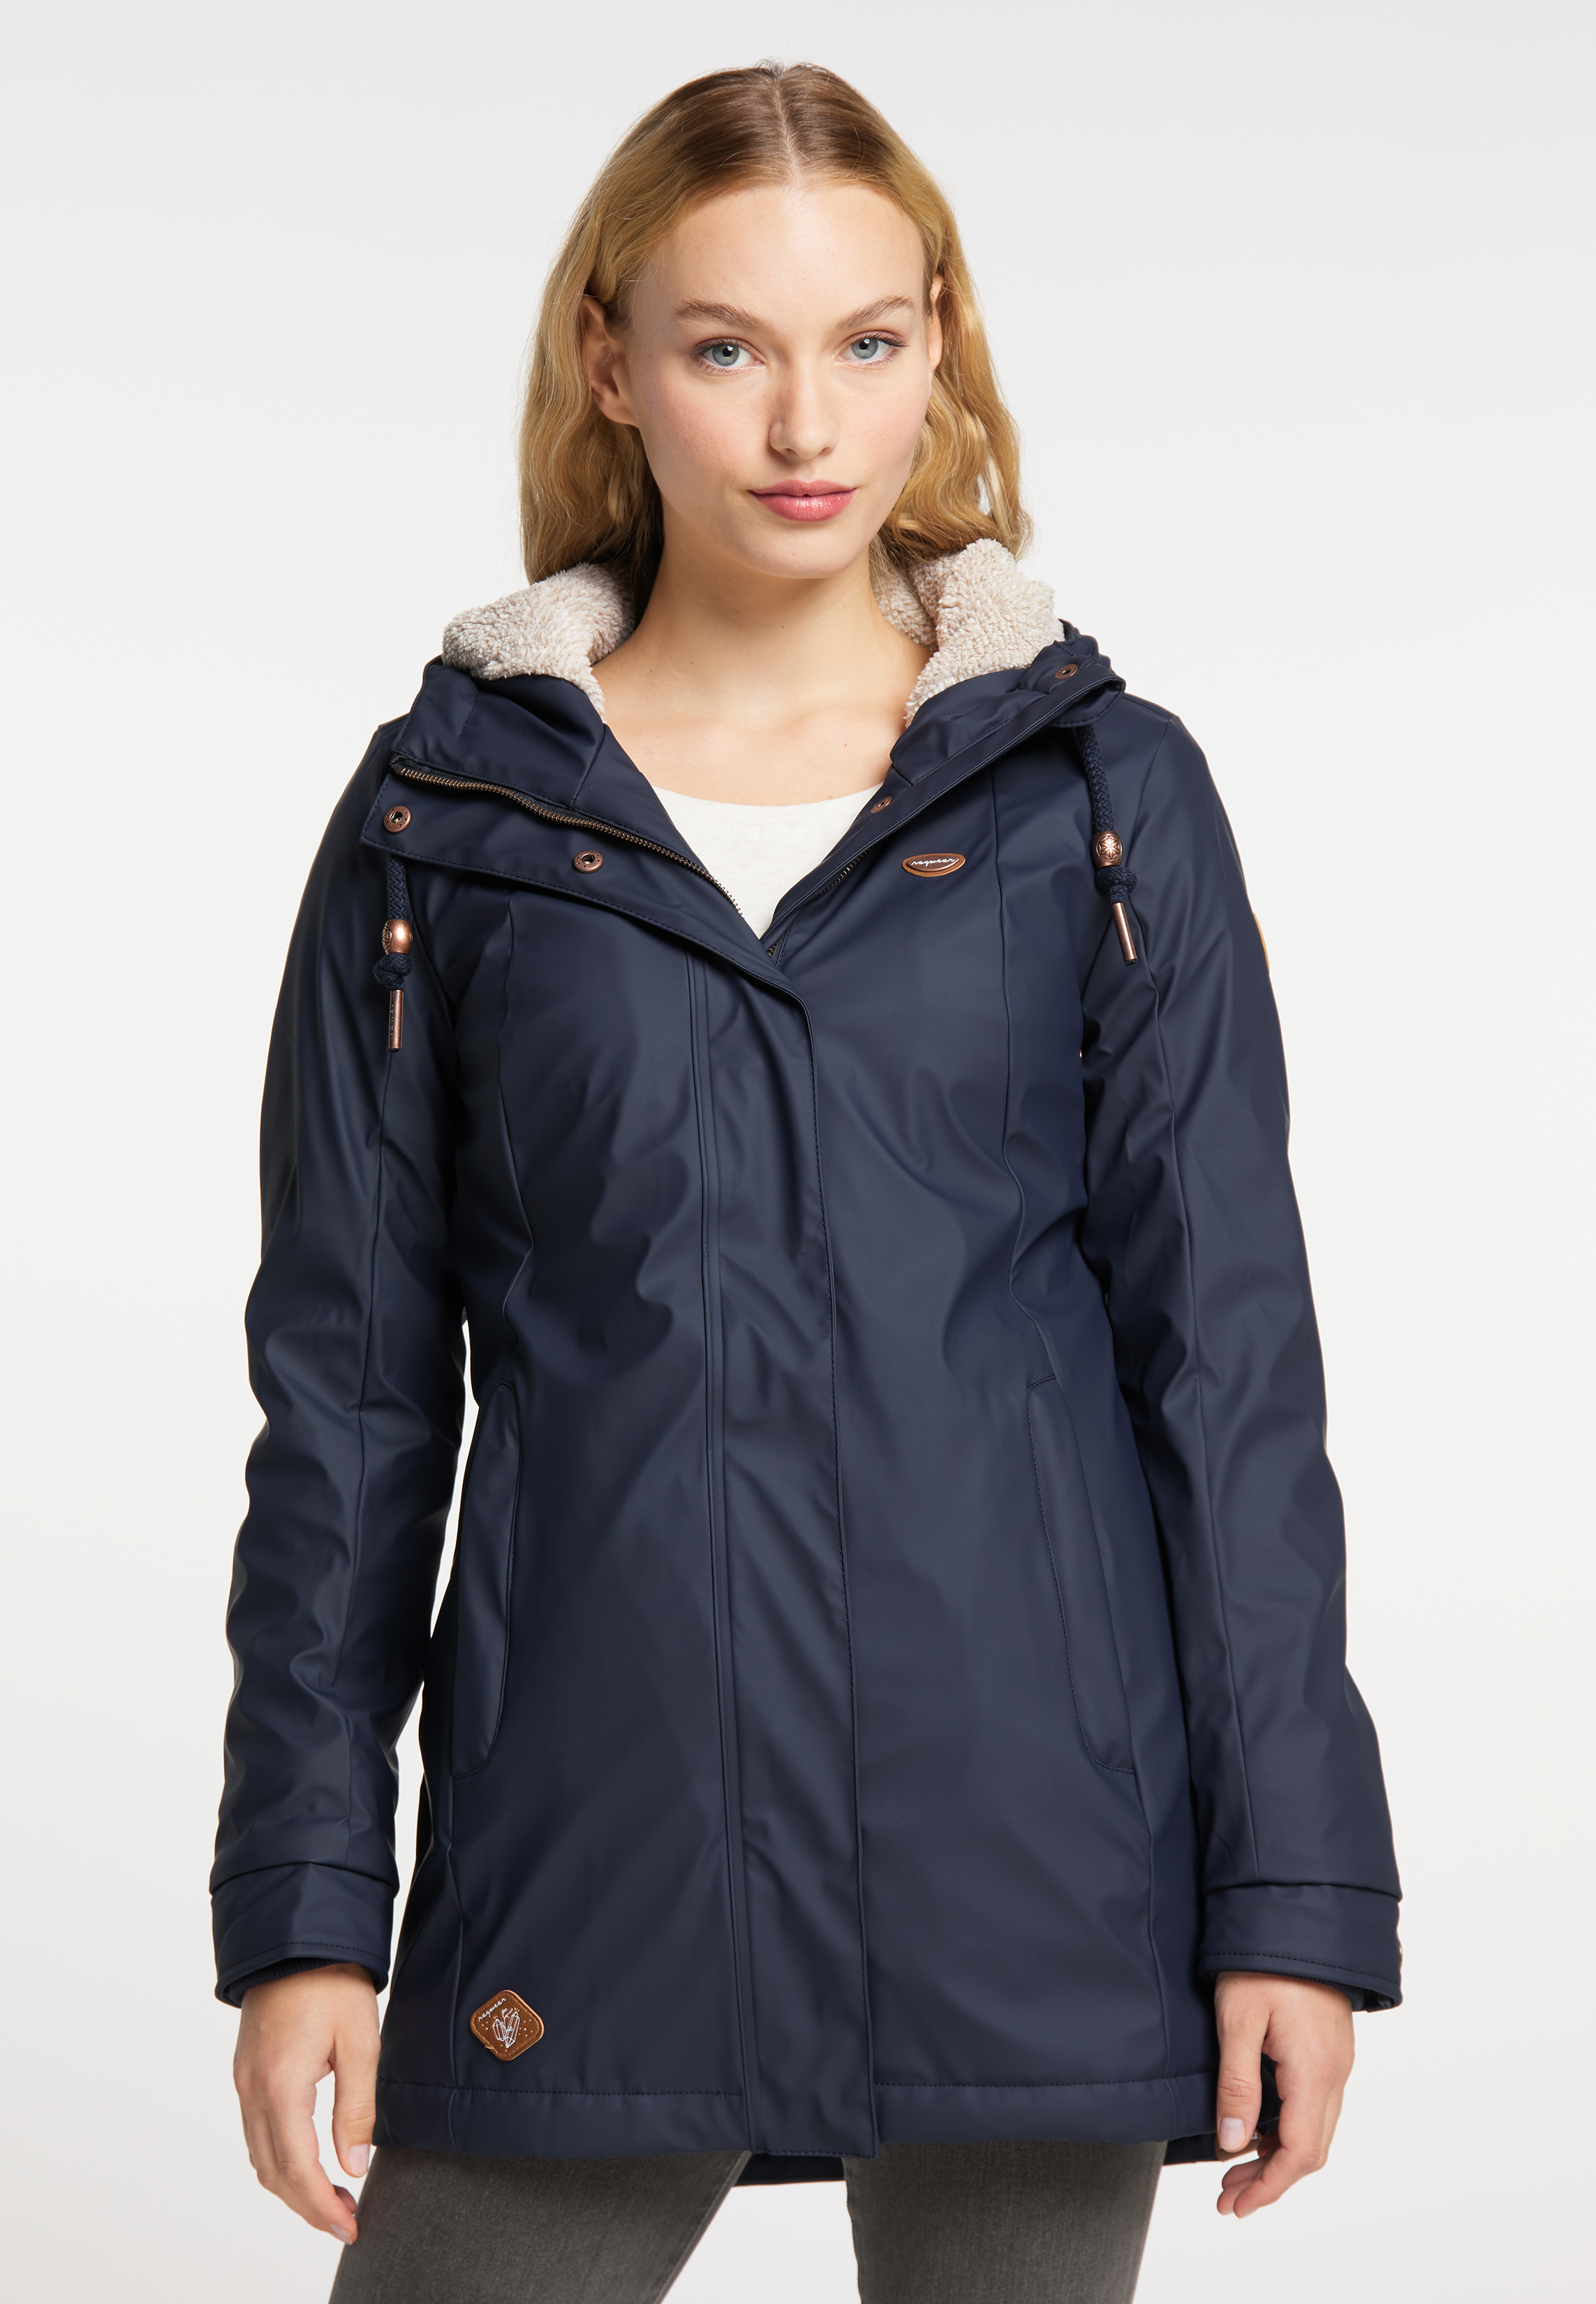 wear this jackets | rain ragwear Stylish season! Magazine | Top to